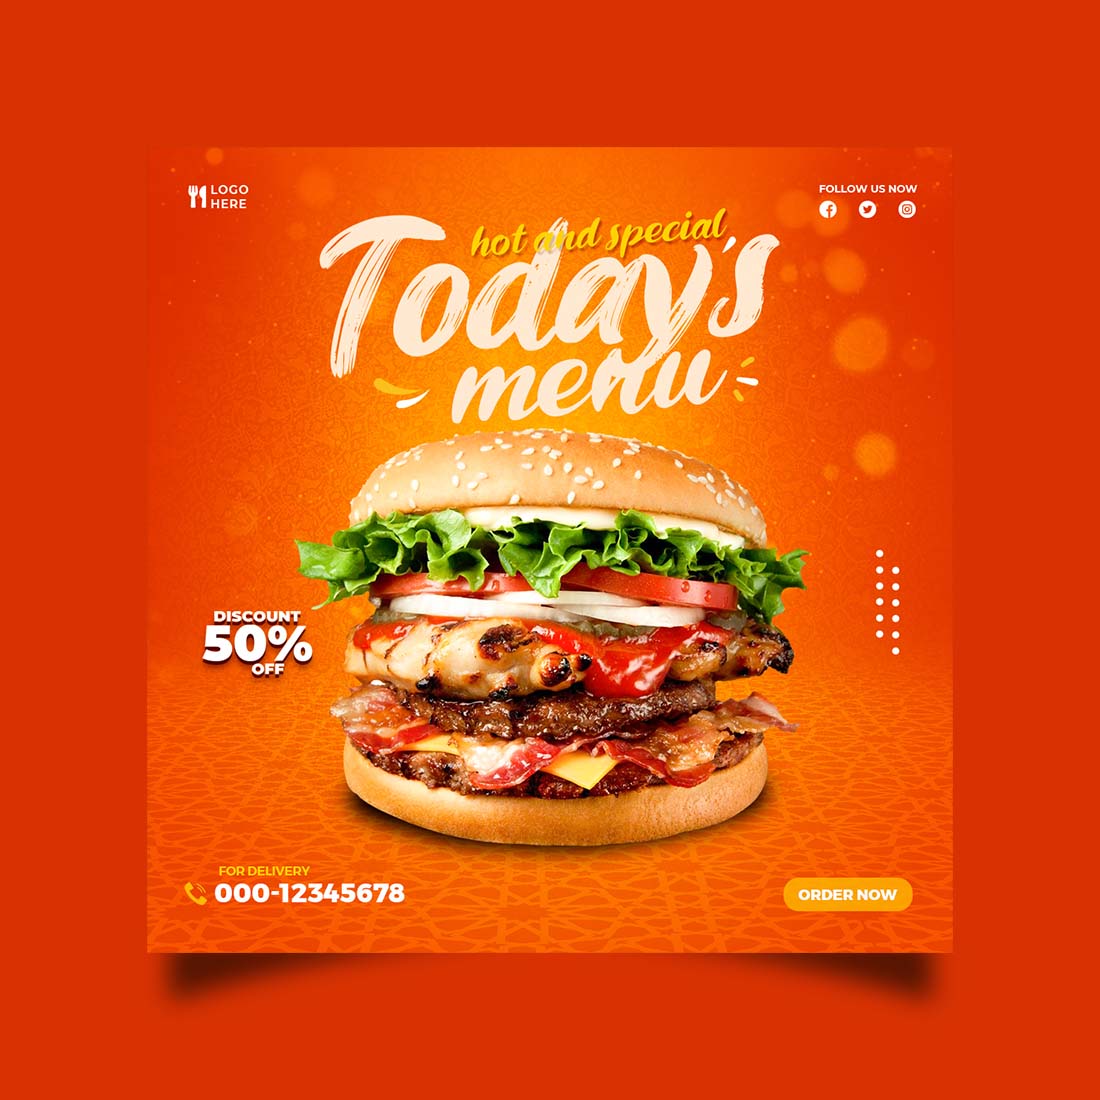 Food social media promotion and instagram banner post design preview image.